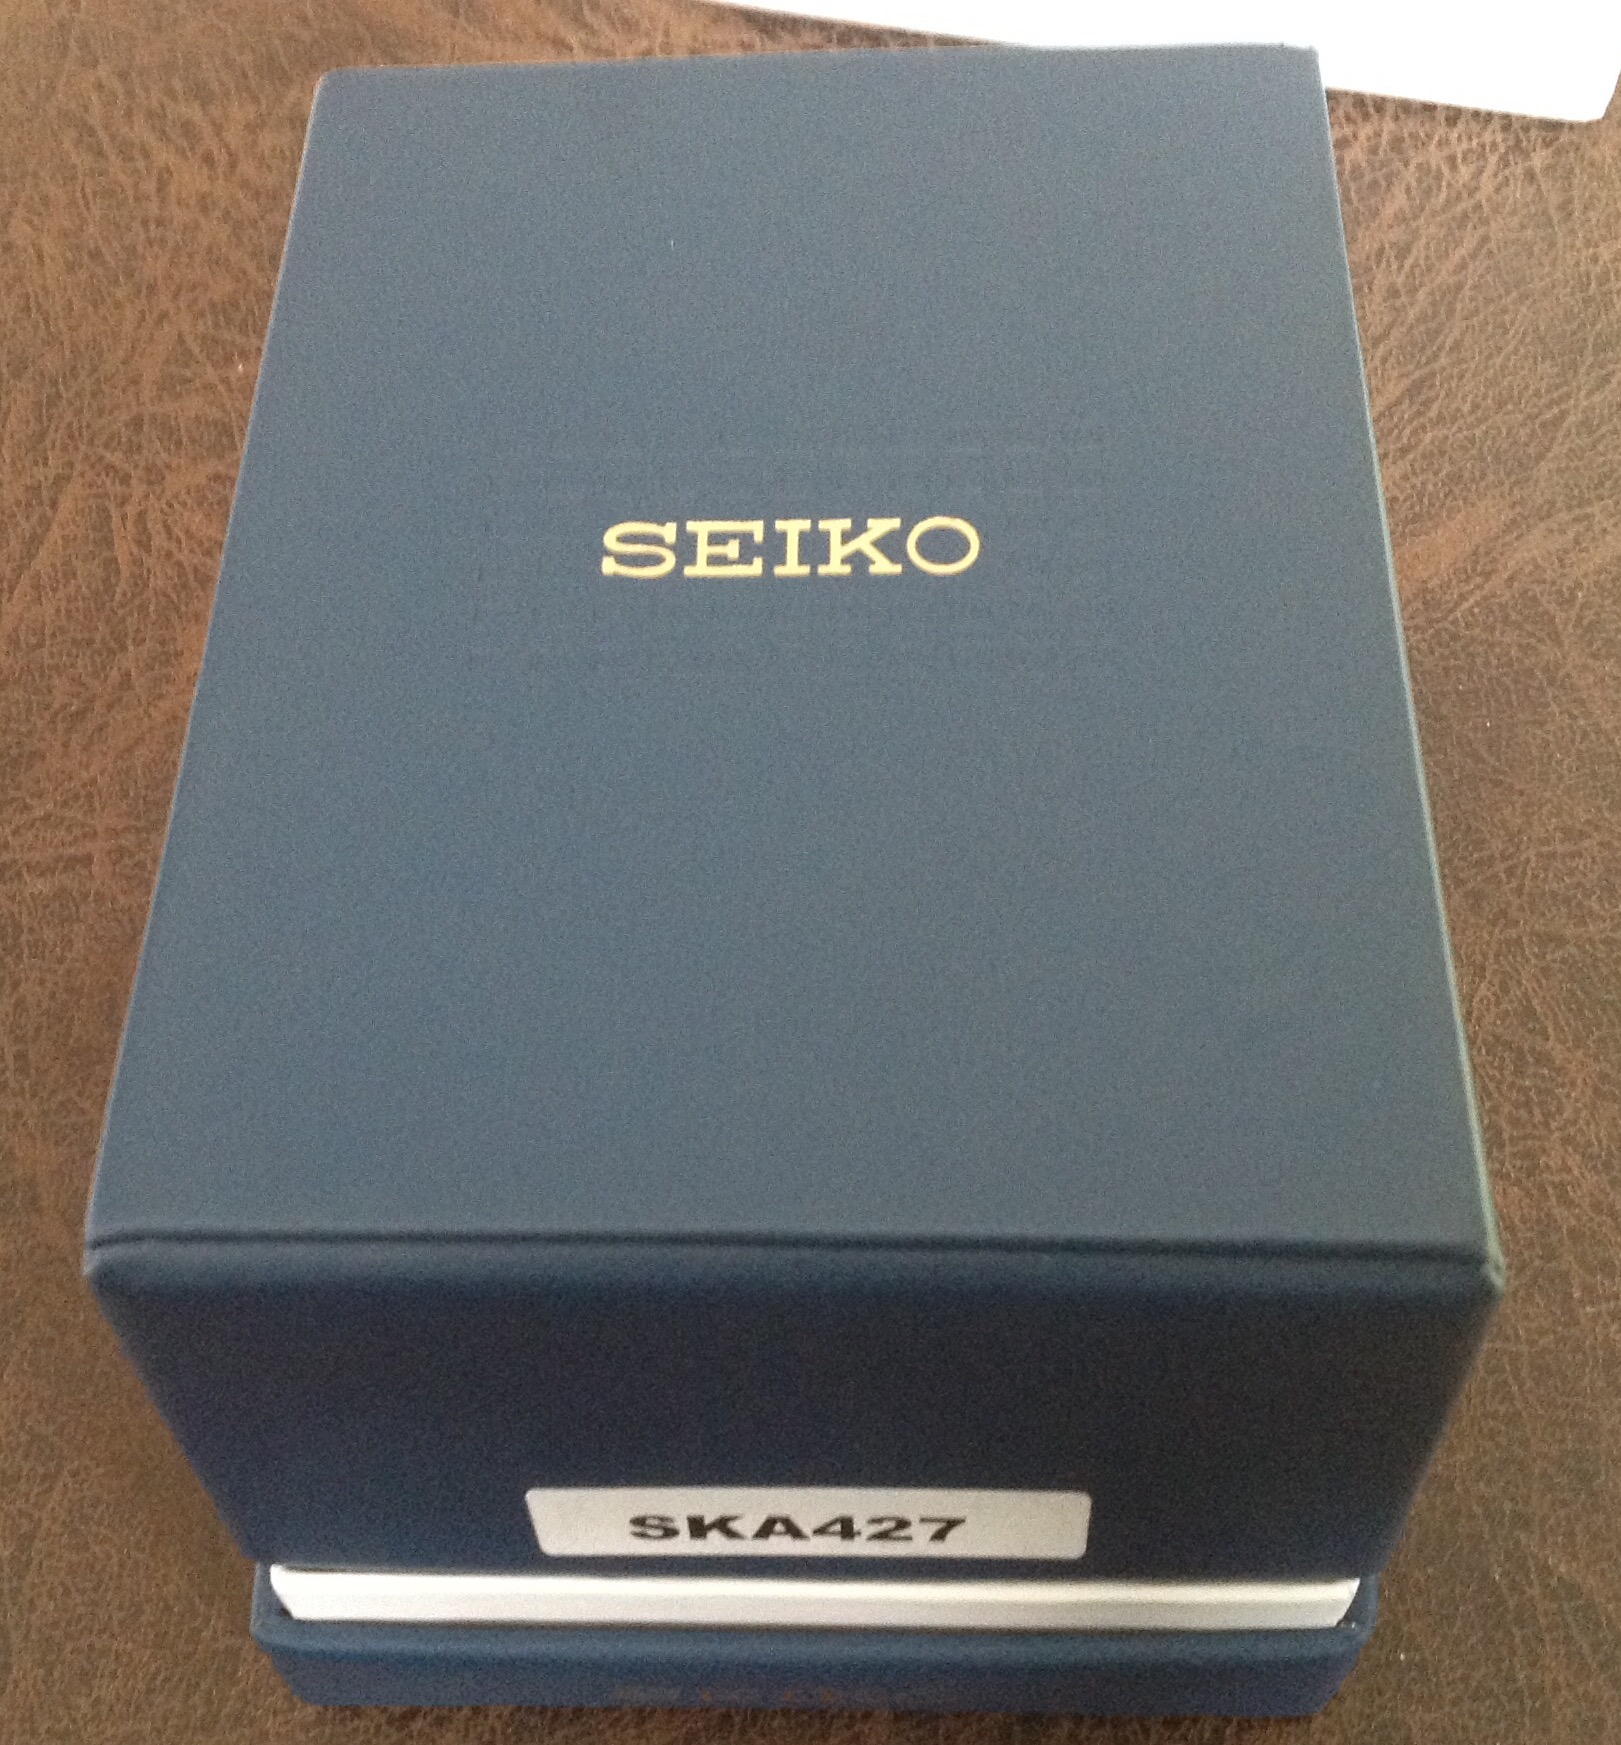 Seiko SKA427P1 (BFK) Black Ionized Bracelet and Rubber Bands $190. |  WatchCharts